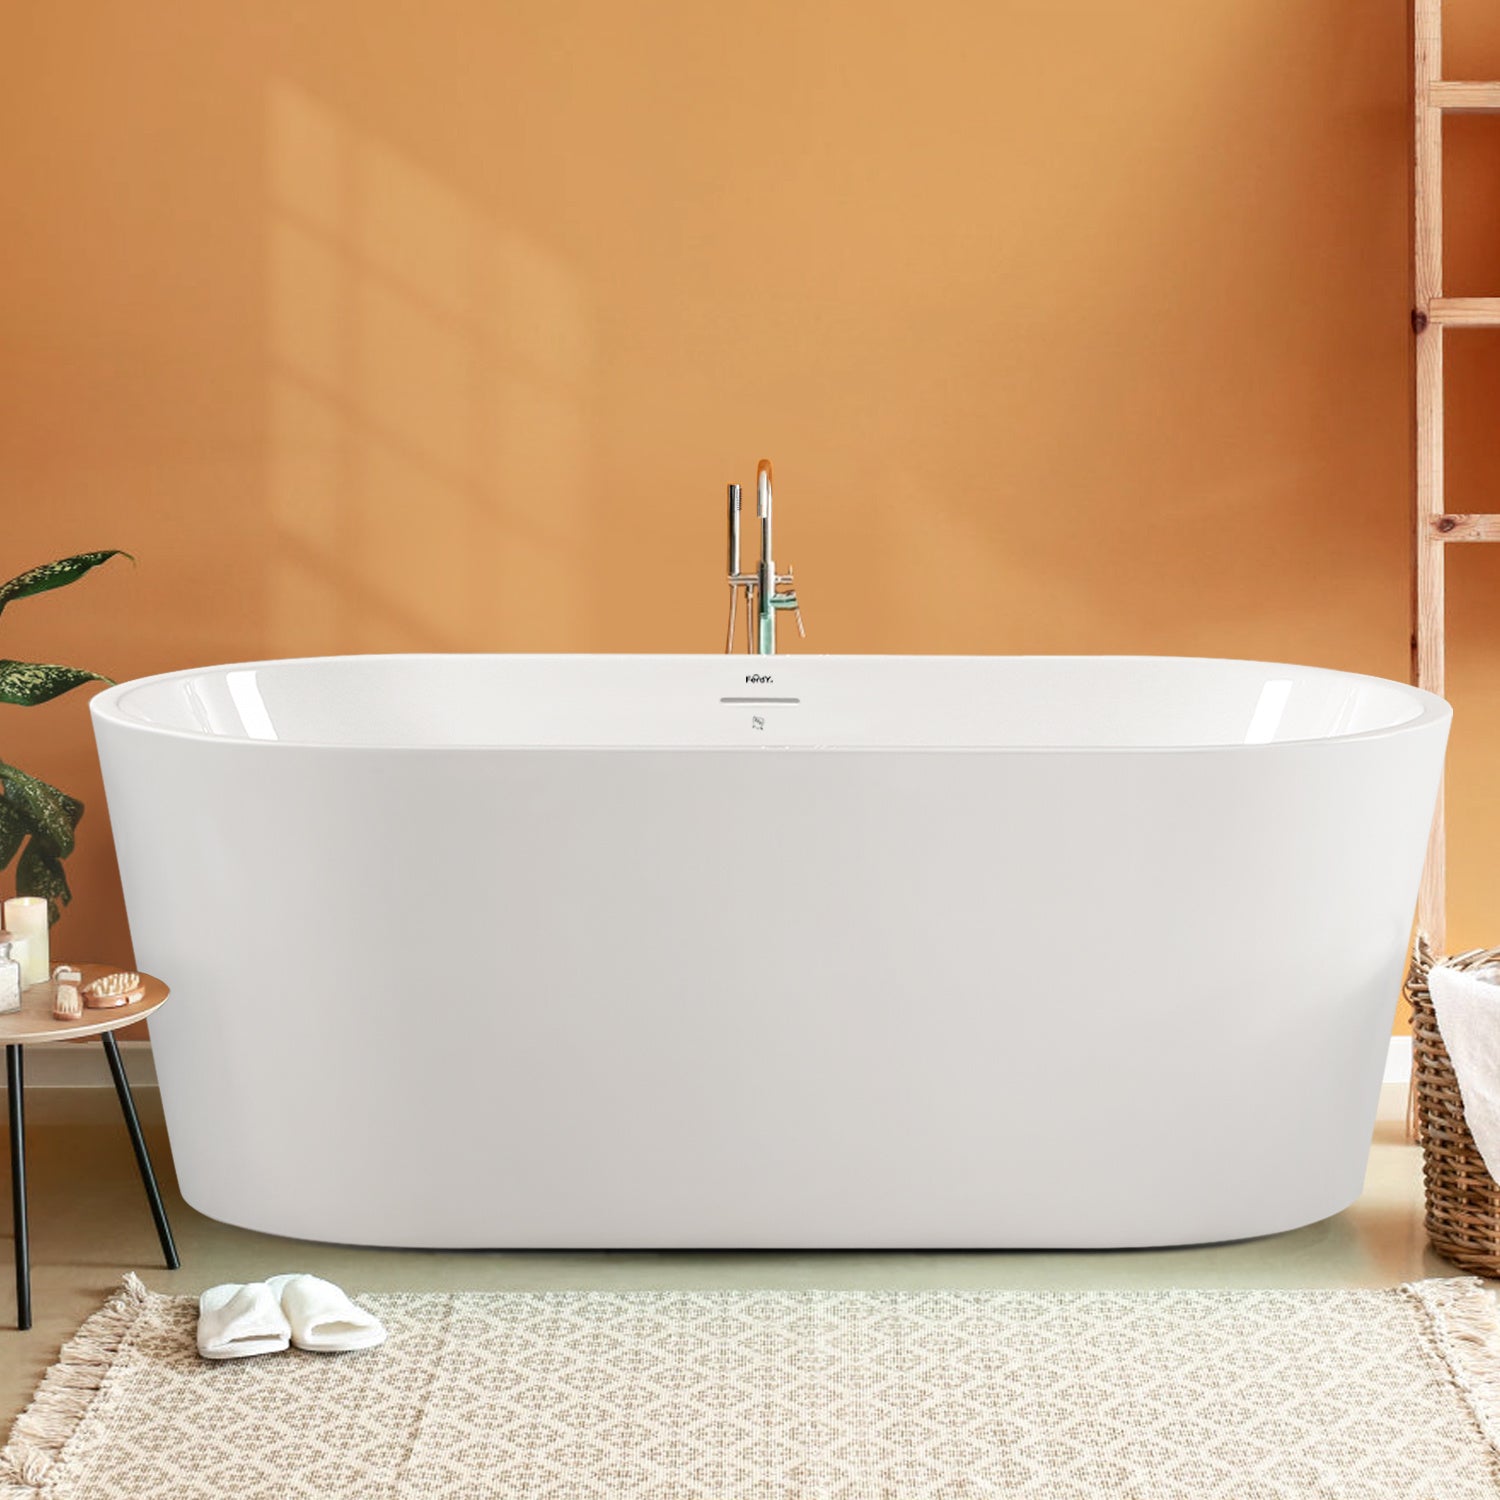 FerdY Shangri-La Acrylic Freestanding Bathtub, Small Classic Oval Shape Acrylic Soaking Bathtub with Brushed Nickel Drain & Minimalist Linear Design Overflow, Modern White, cUPC Certified - image 1 of 52